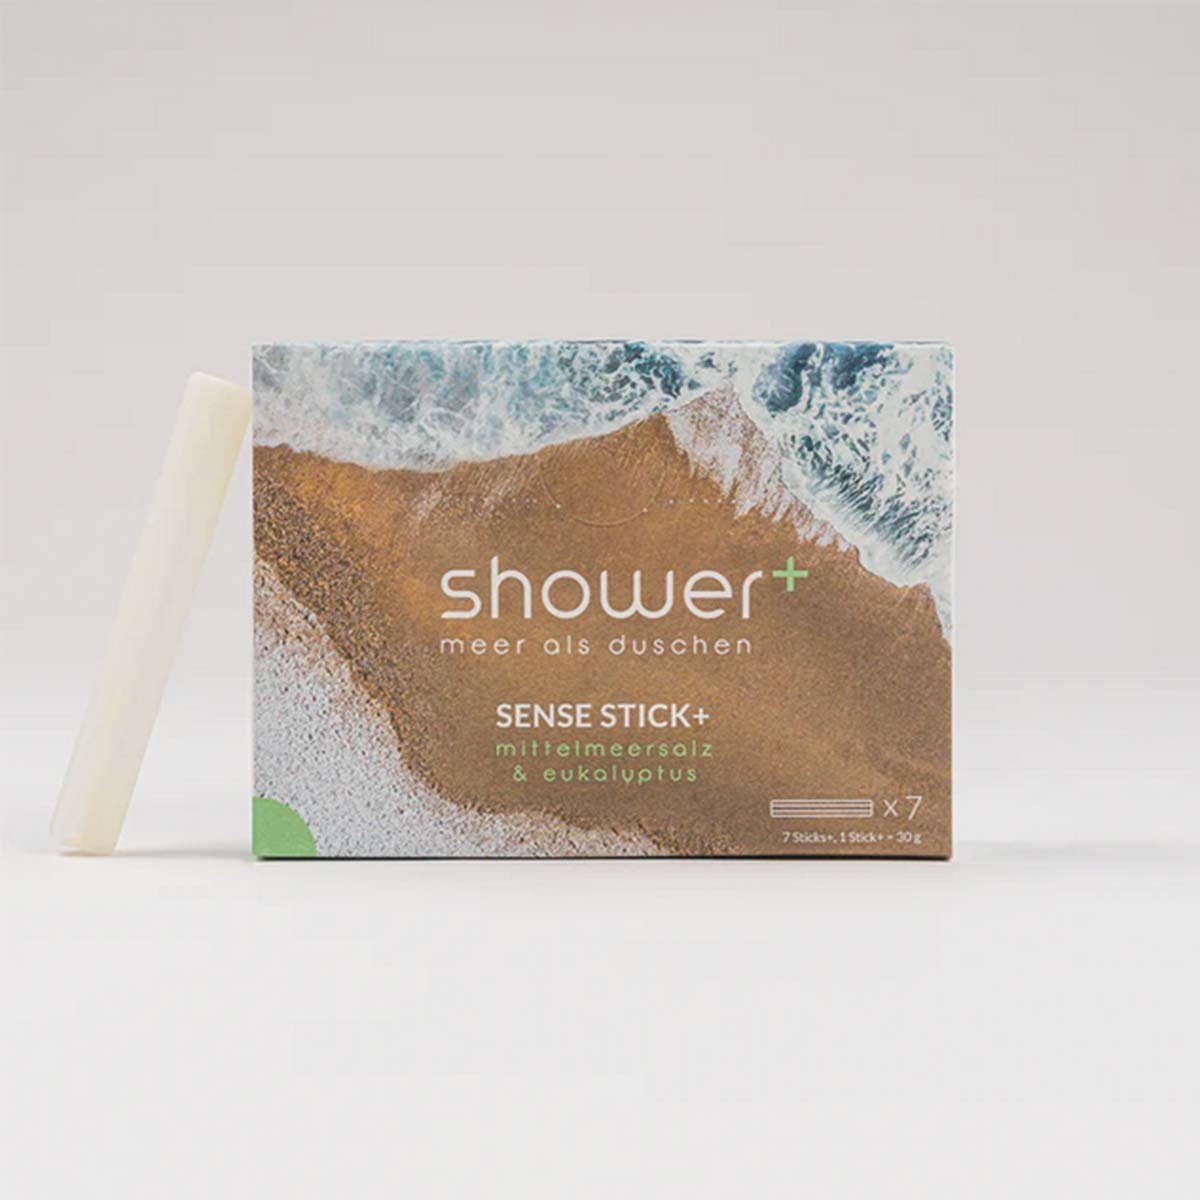 Shower+ Badesalz Sense Stick+ Mittelmeersalz & Eukalyptus